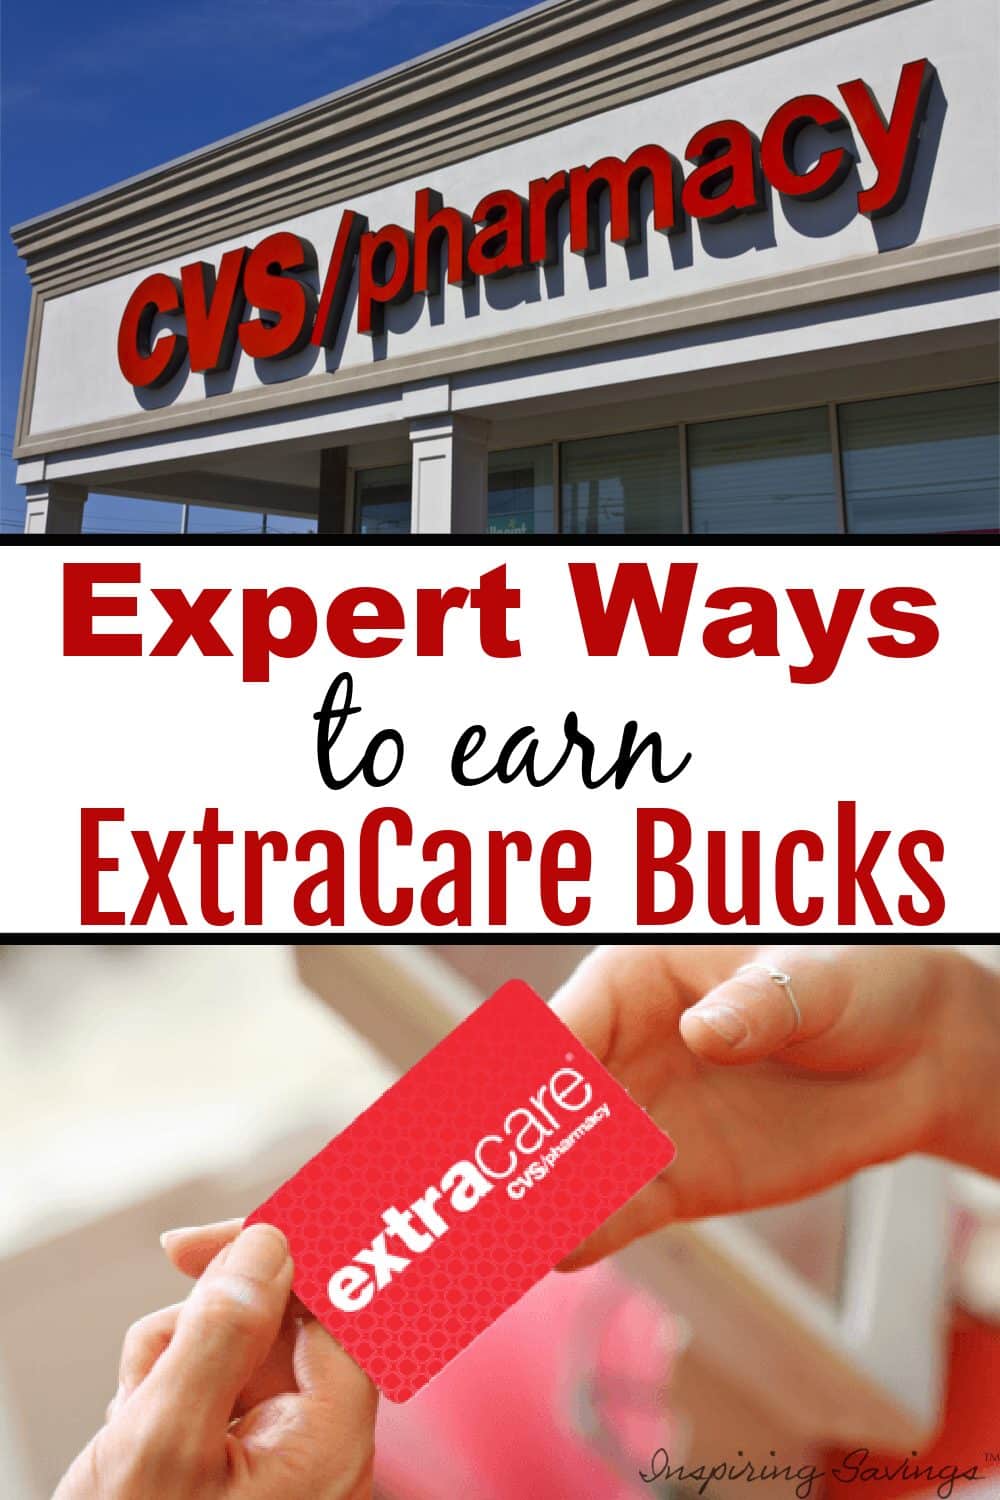 Ways to earn Extracare Bucks